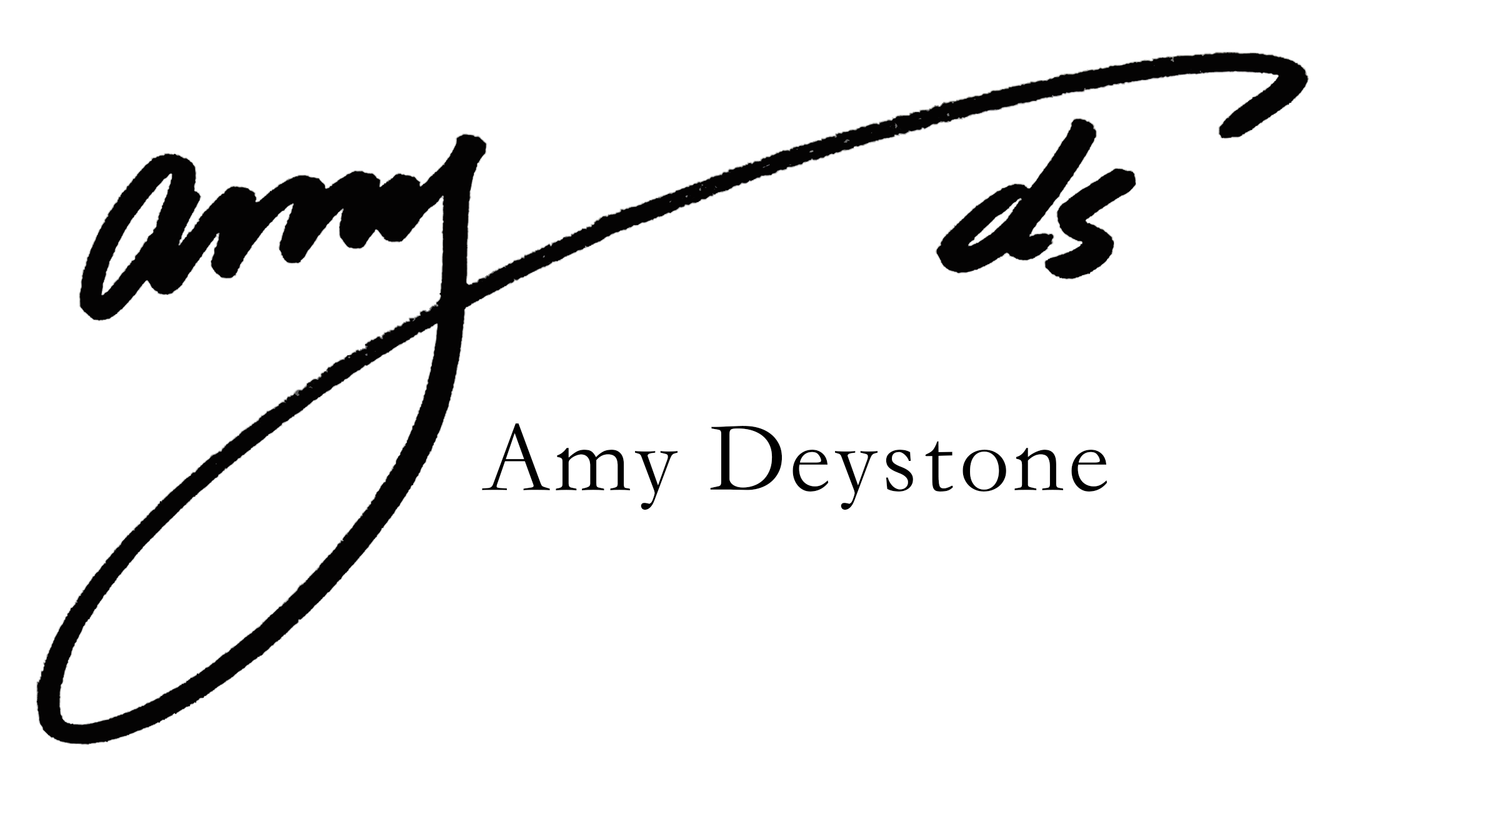 Amy Deystone